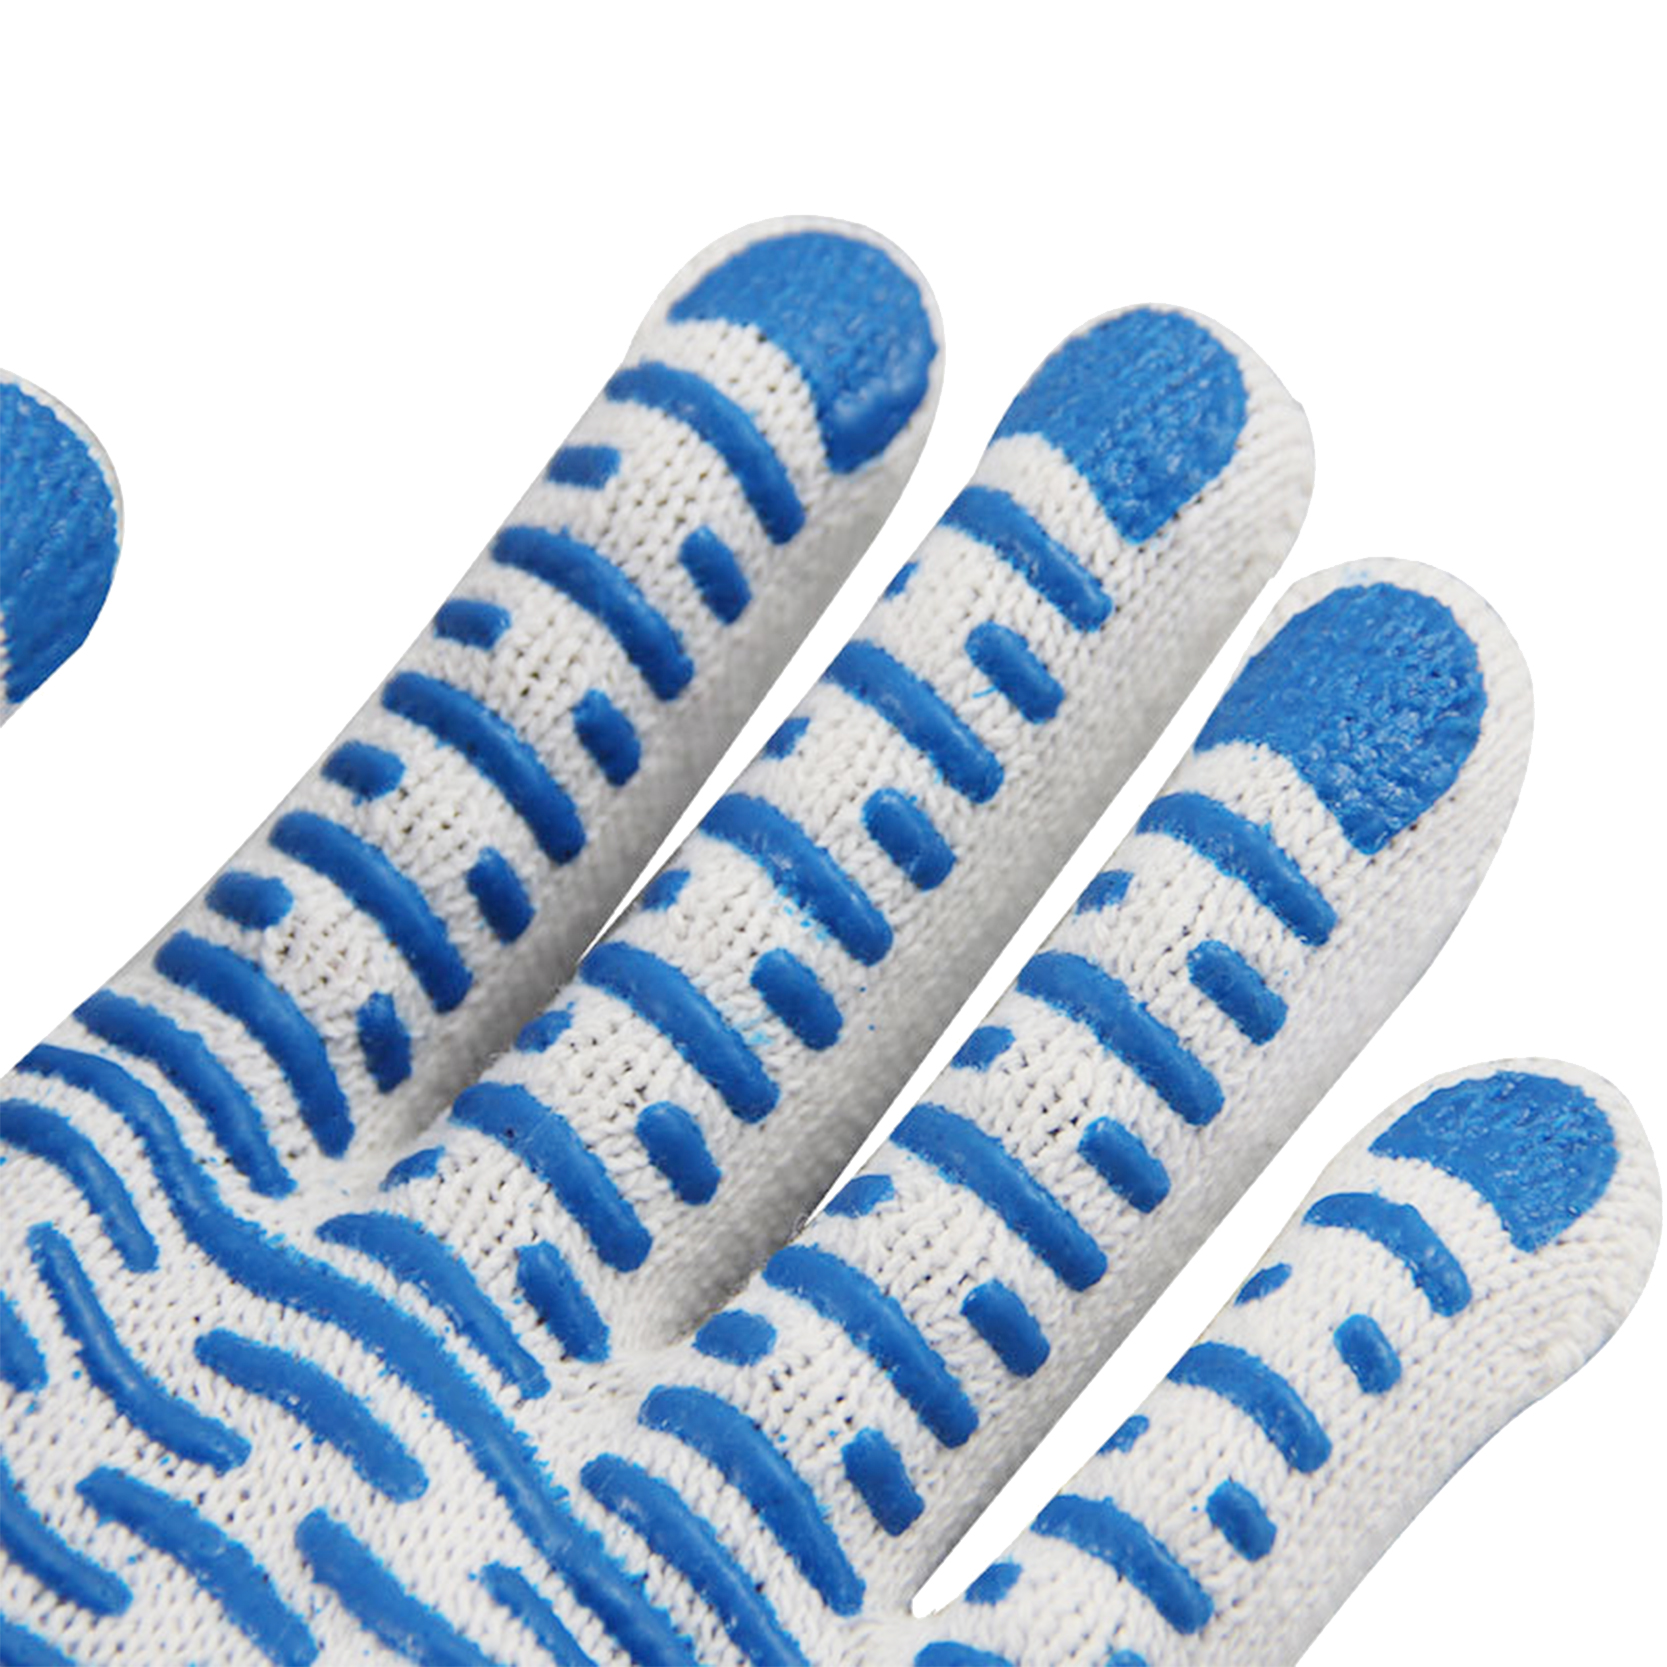 Pvc Dotted Natural White Cotton Glove Cotton String Knit Glove (4)